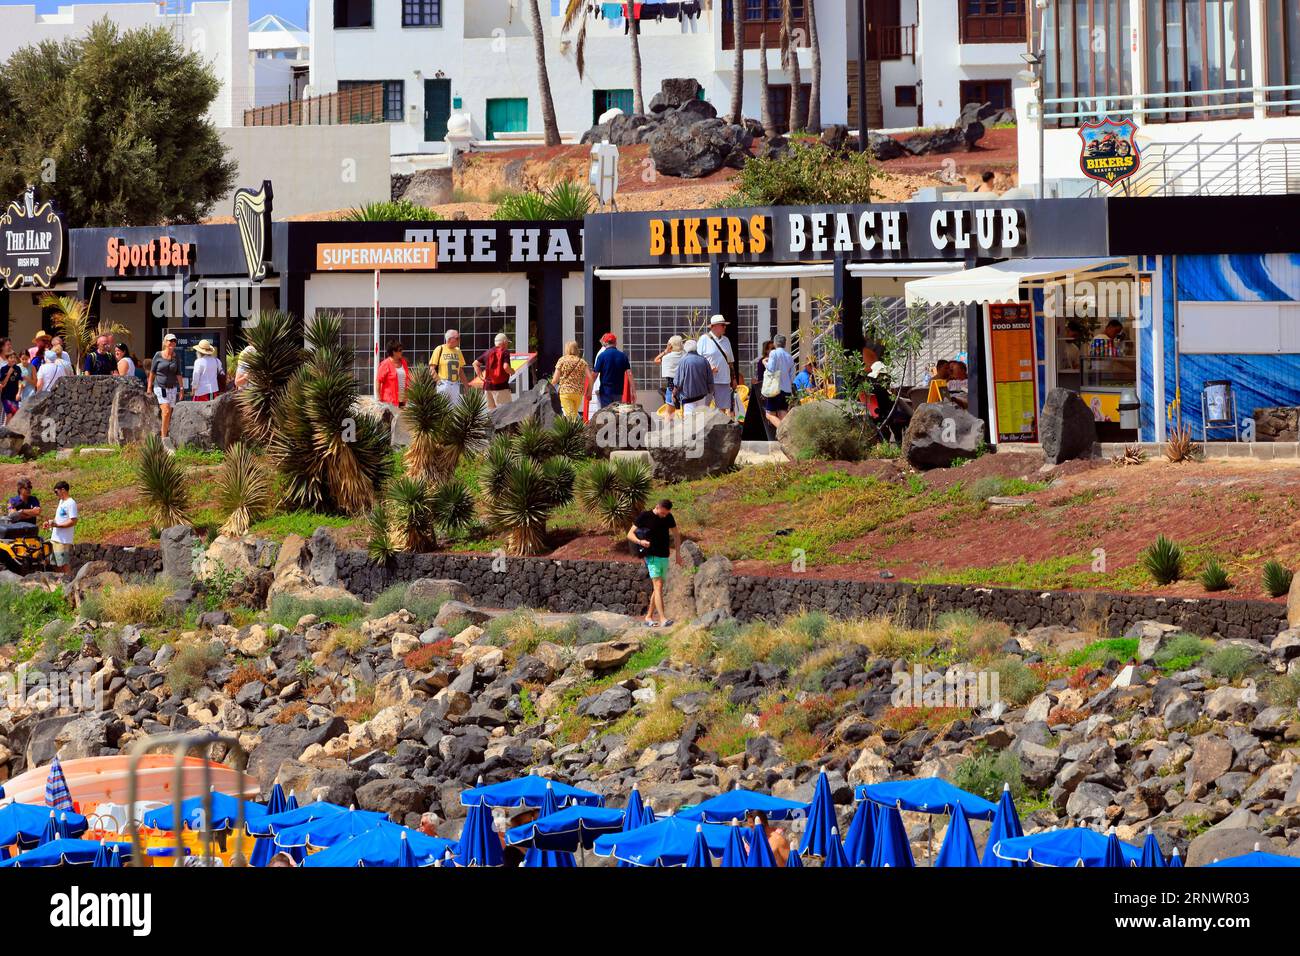 Le Bikers Beach Club bar et d'autres cafés, bars et restaurants en bord de mer, Playa Dorada, Playa Blanca, Lanzarote, îles Canaries, Espagne Banque D'Images